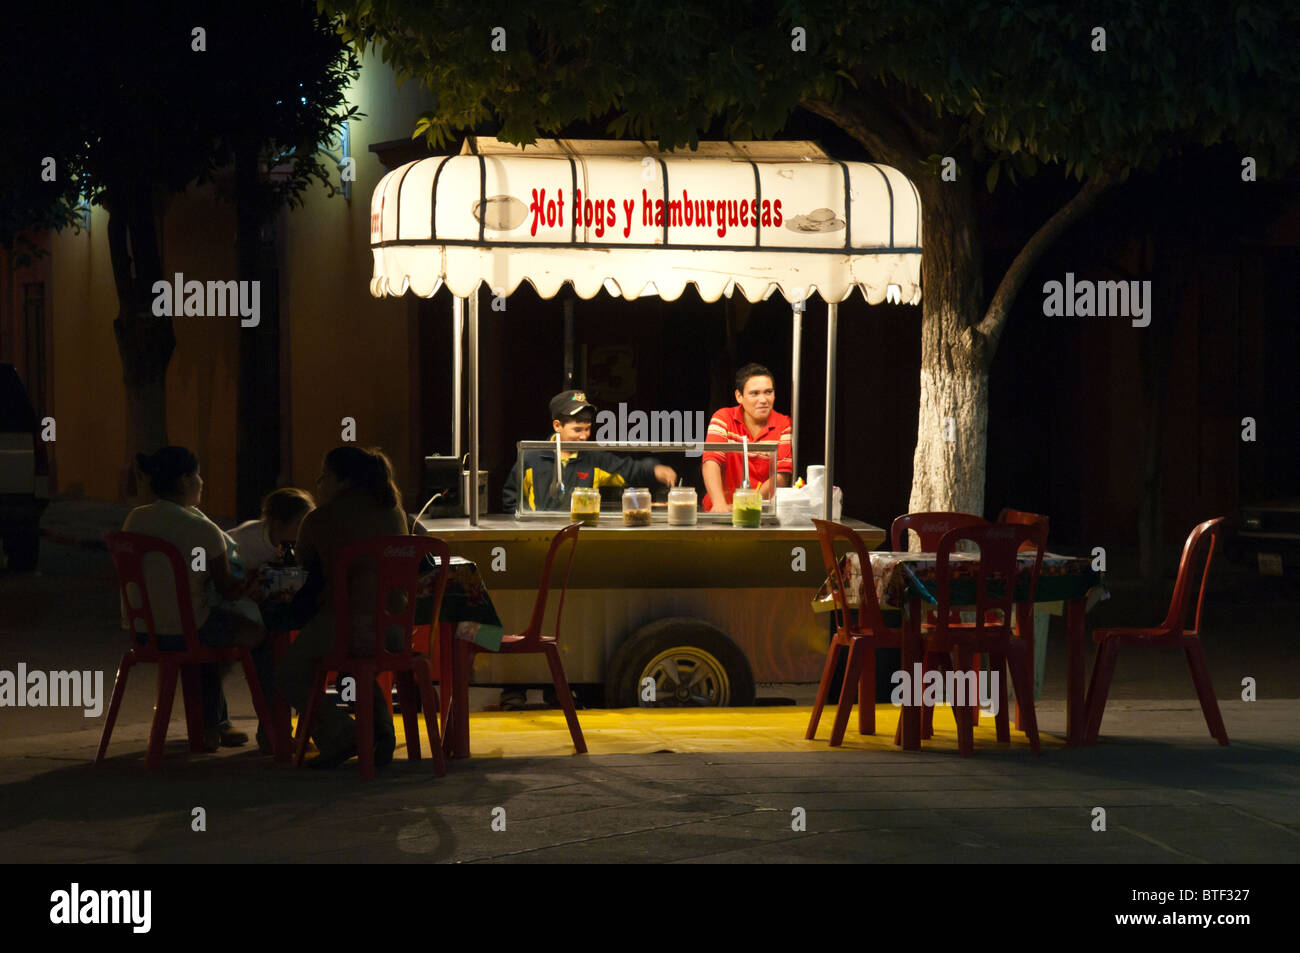 Hot Dogs y hamburguesas (hamburgers) food cart on the plaza in El Fuerte, Sinaloa, Mexico. Stock Photo